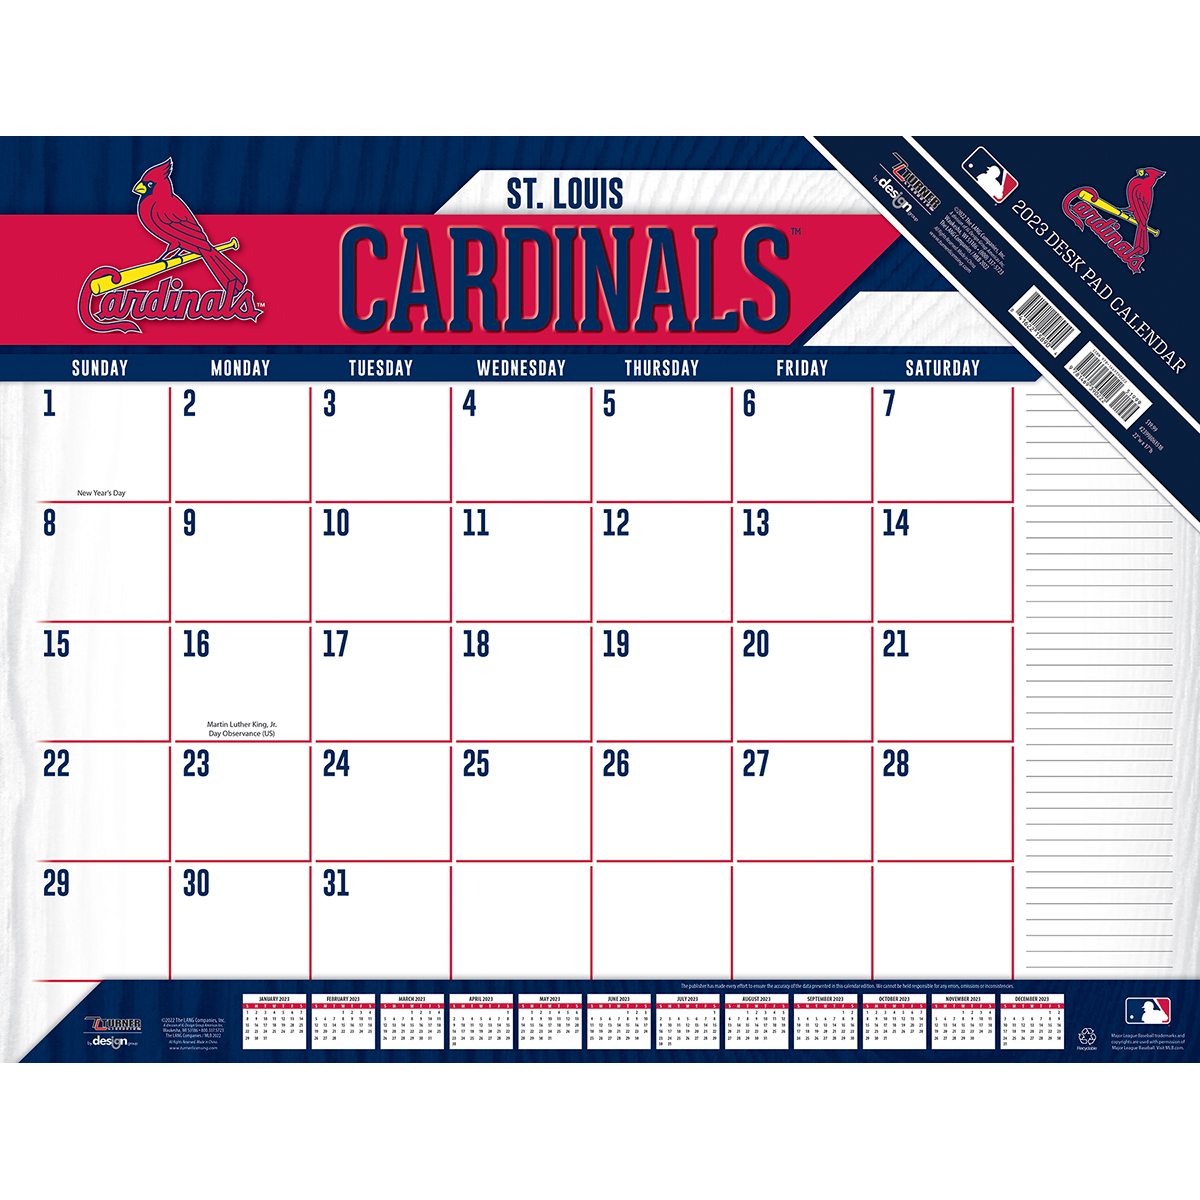 St. Louis Cardinals 2020 MLB 22 x 17 Desk Calendar - Buy at KHC Sports